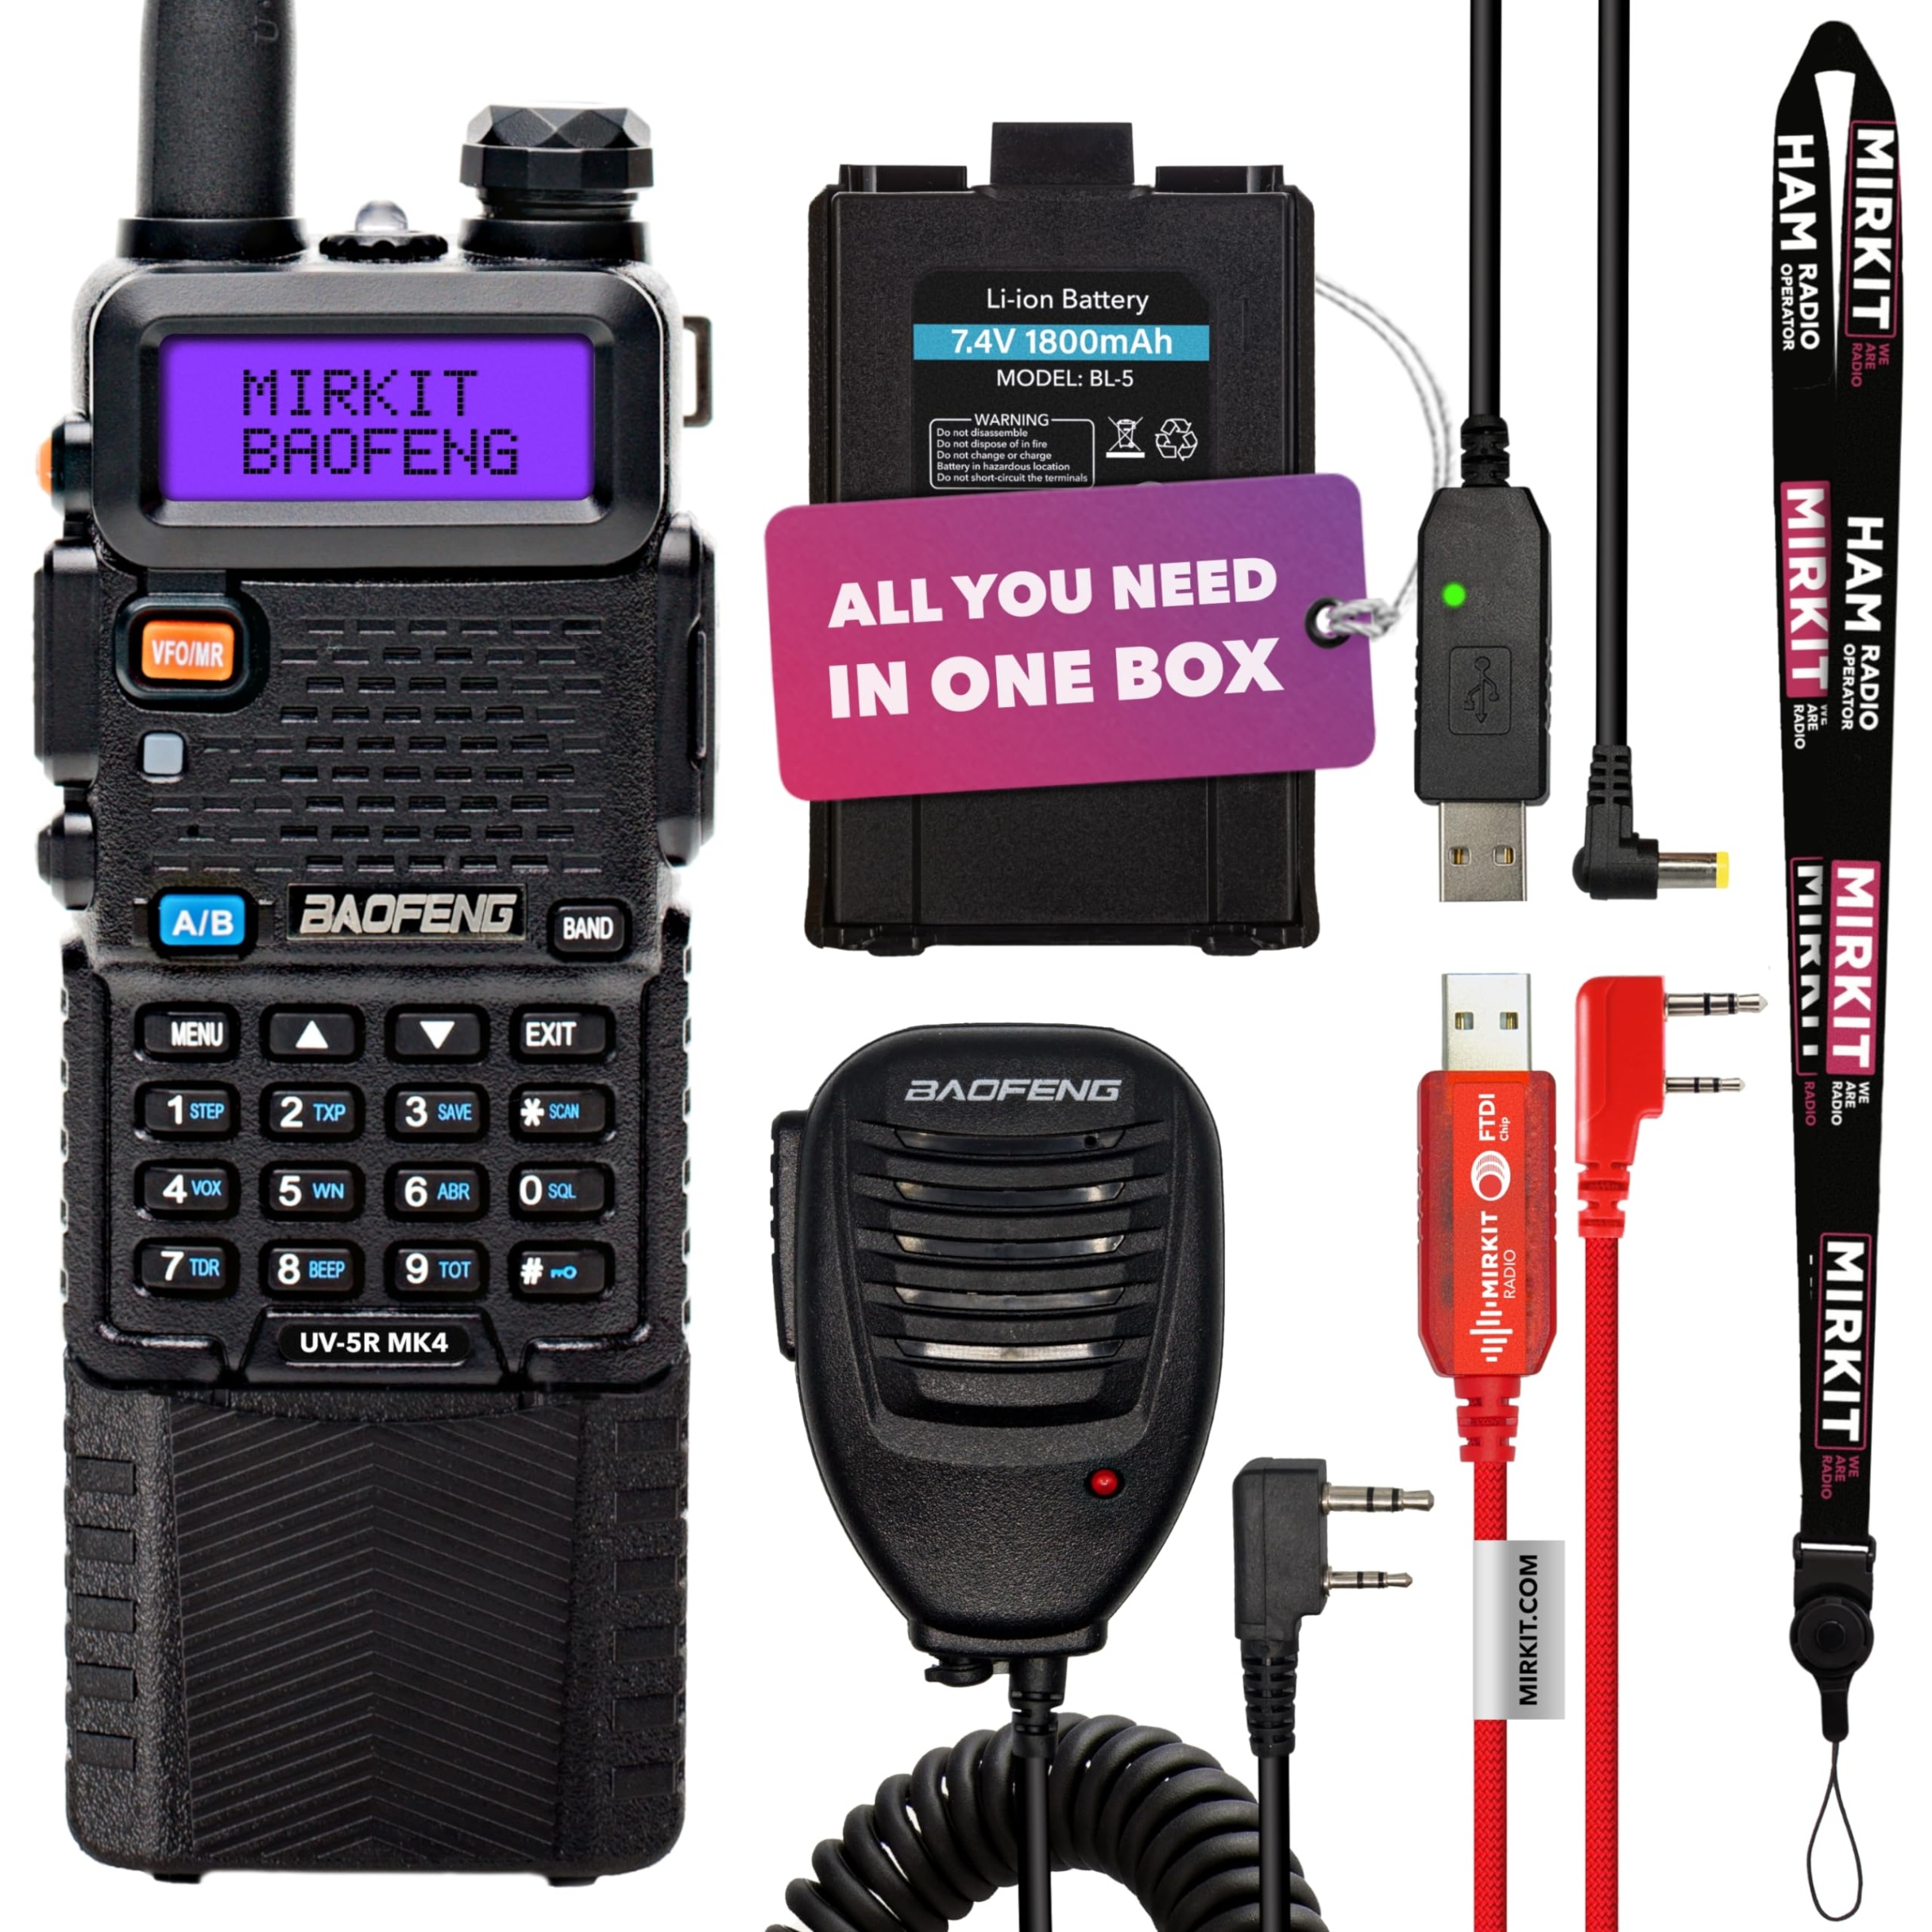 accessories for baofeng uv-5r Bulan 2 Mirkit Baofeng UV-R MK W Extra Pack Two Way Radio - Walkie Talkies  VHF/UHF 1-1/20-0 mhz Ham Radio with Baofeng Accessories: Battery  300